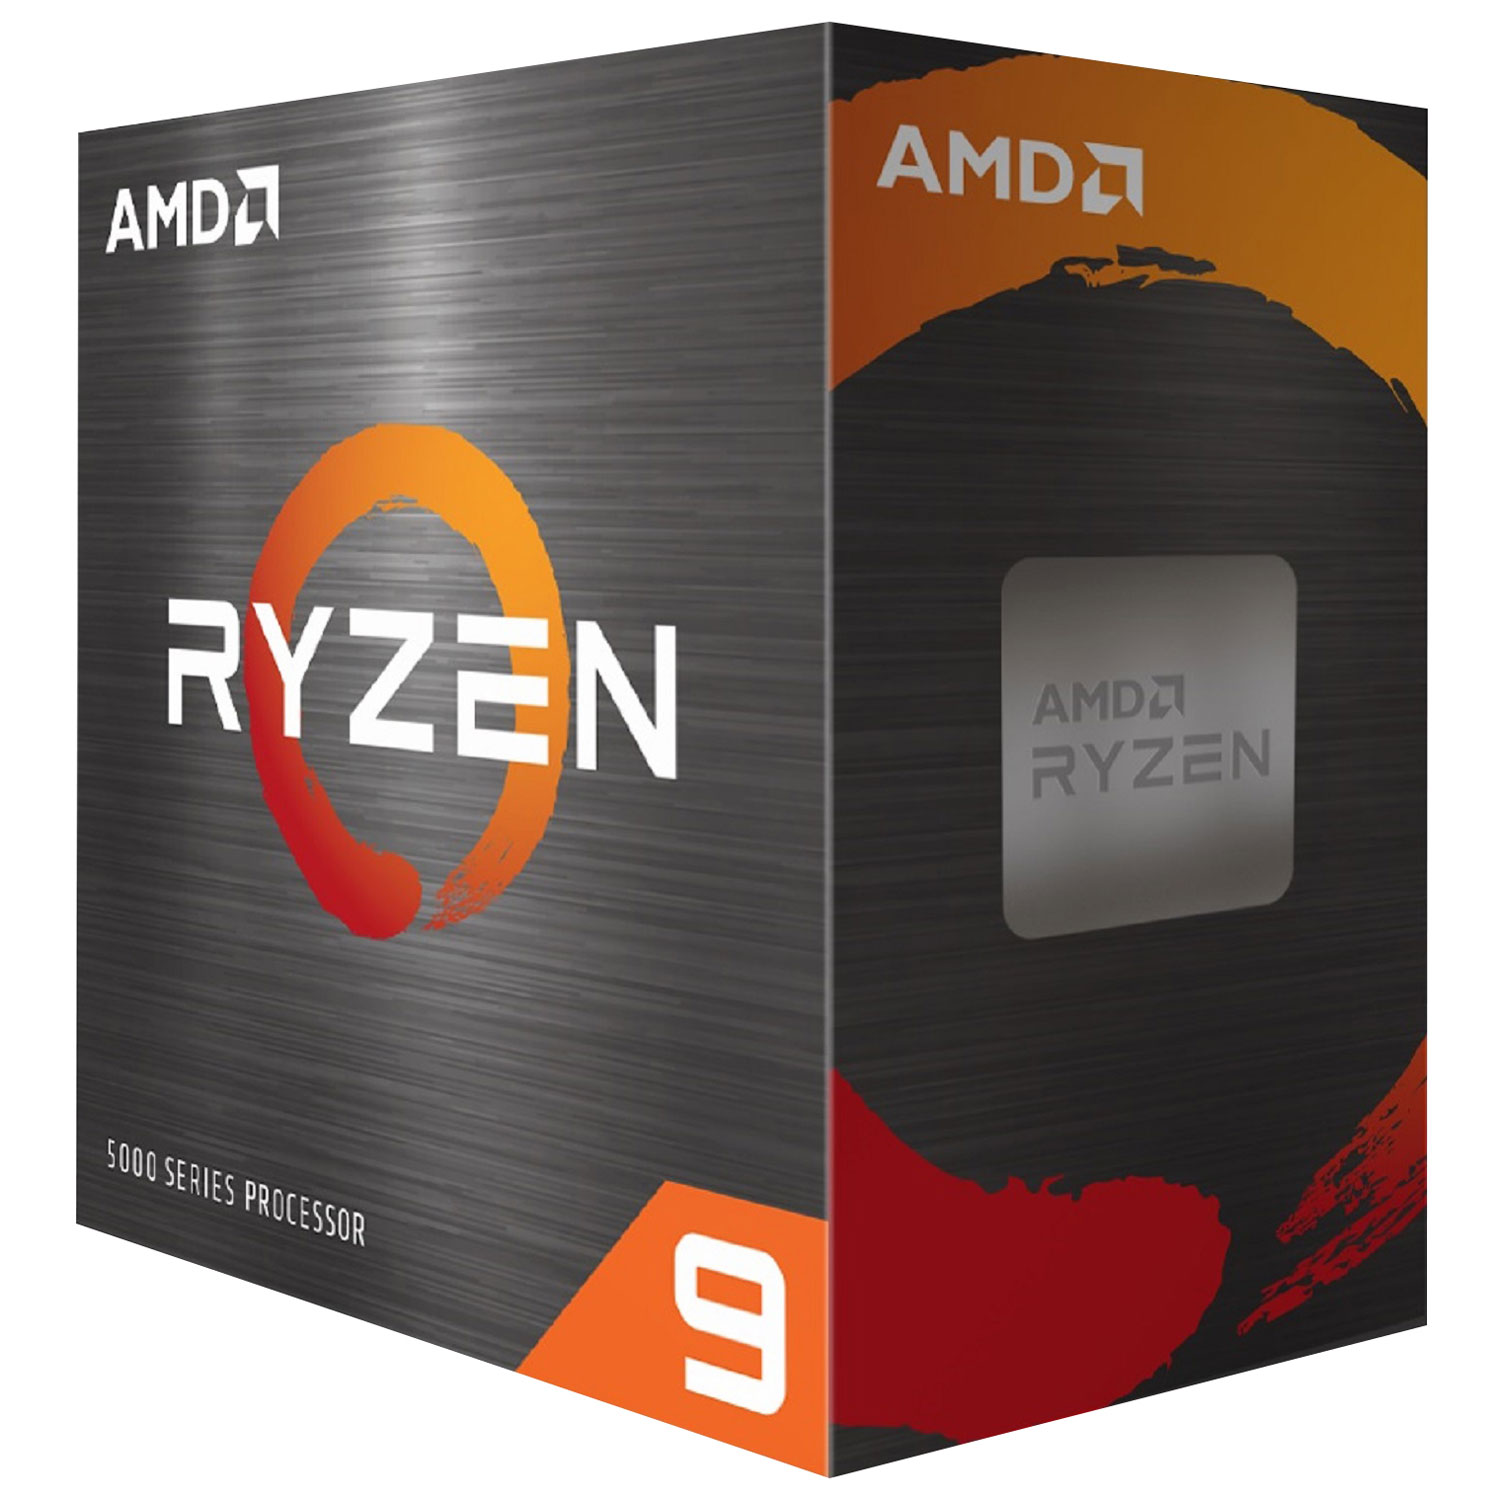 AMD Ryzen 9 5900X 12-Core 3.7GHz AM4 Desktop Processor